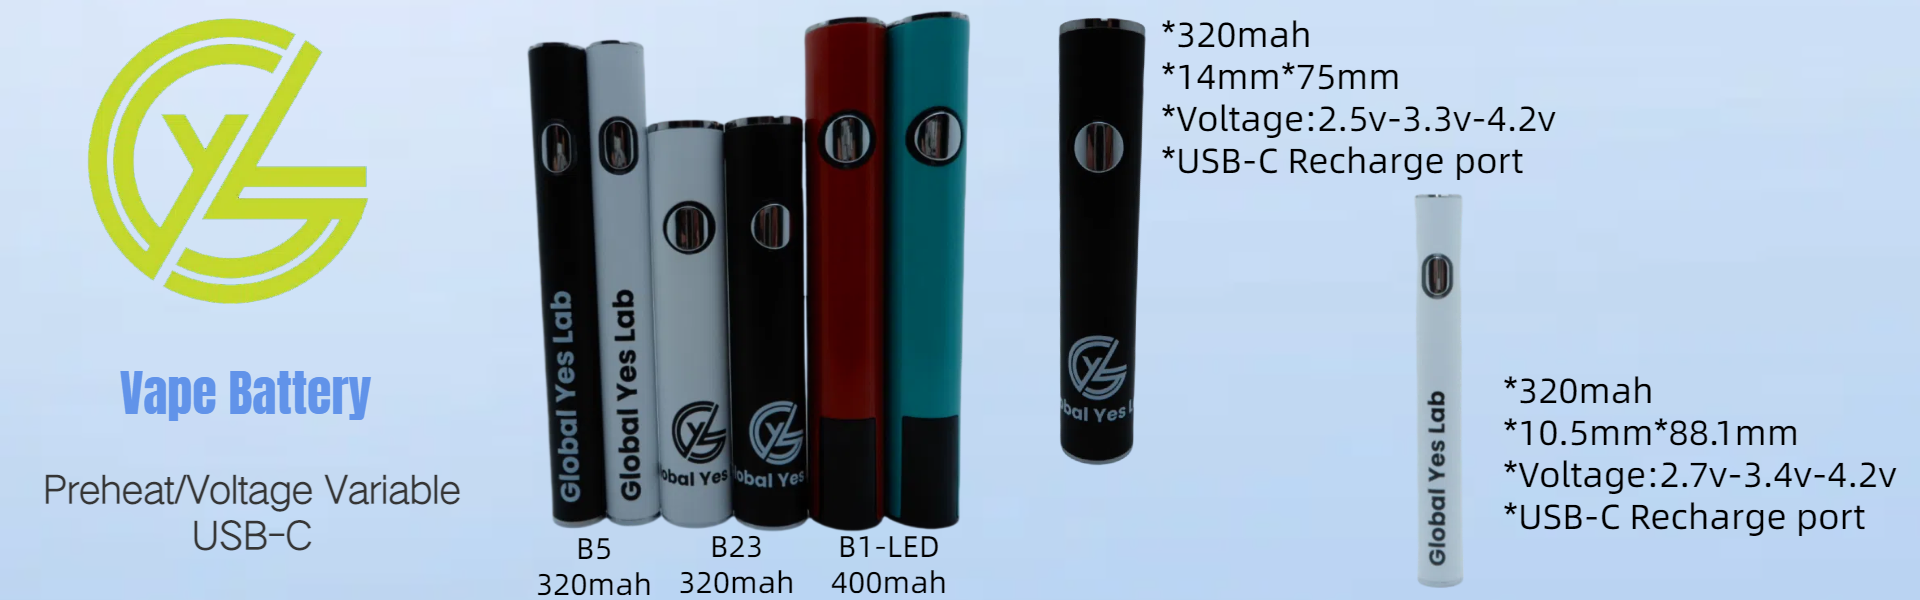 vape battery preheat voltage variable